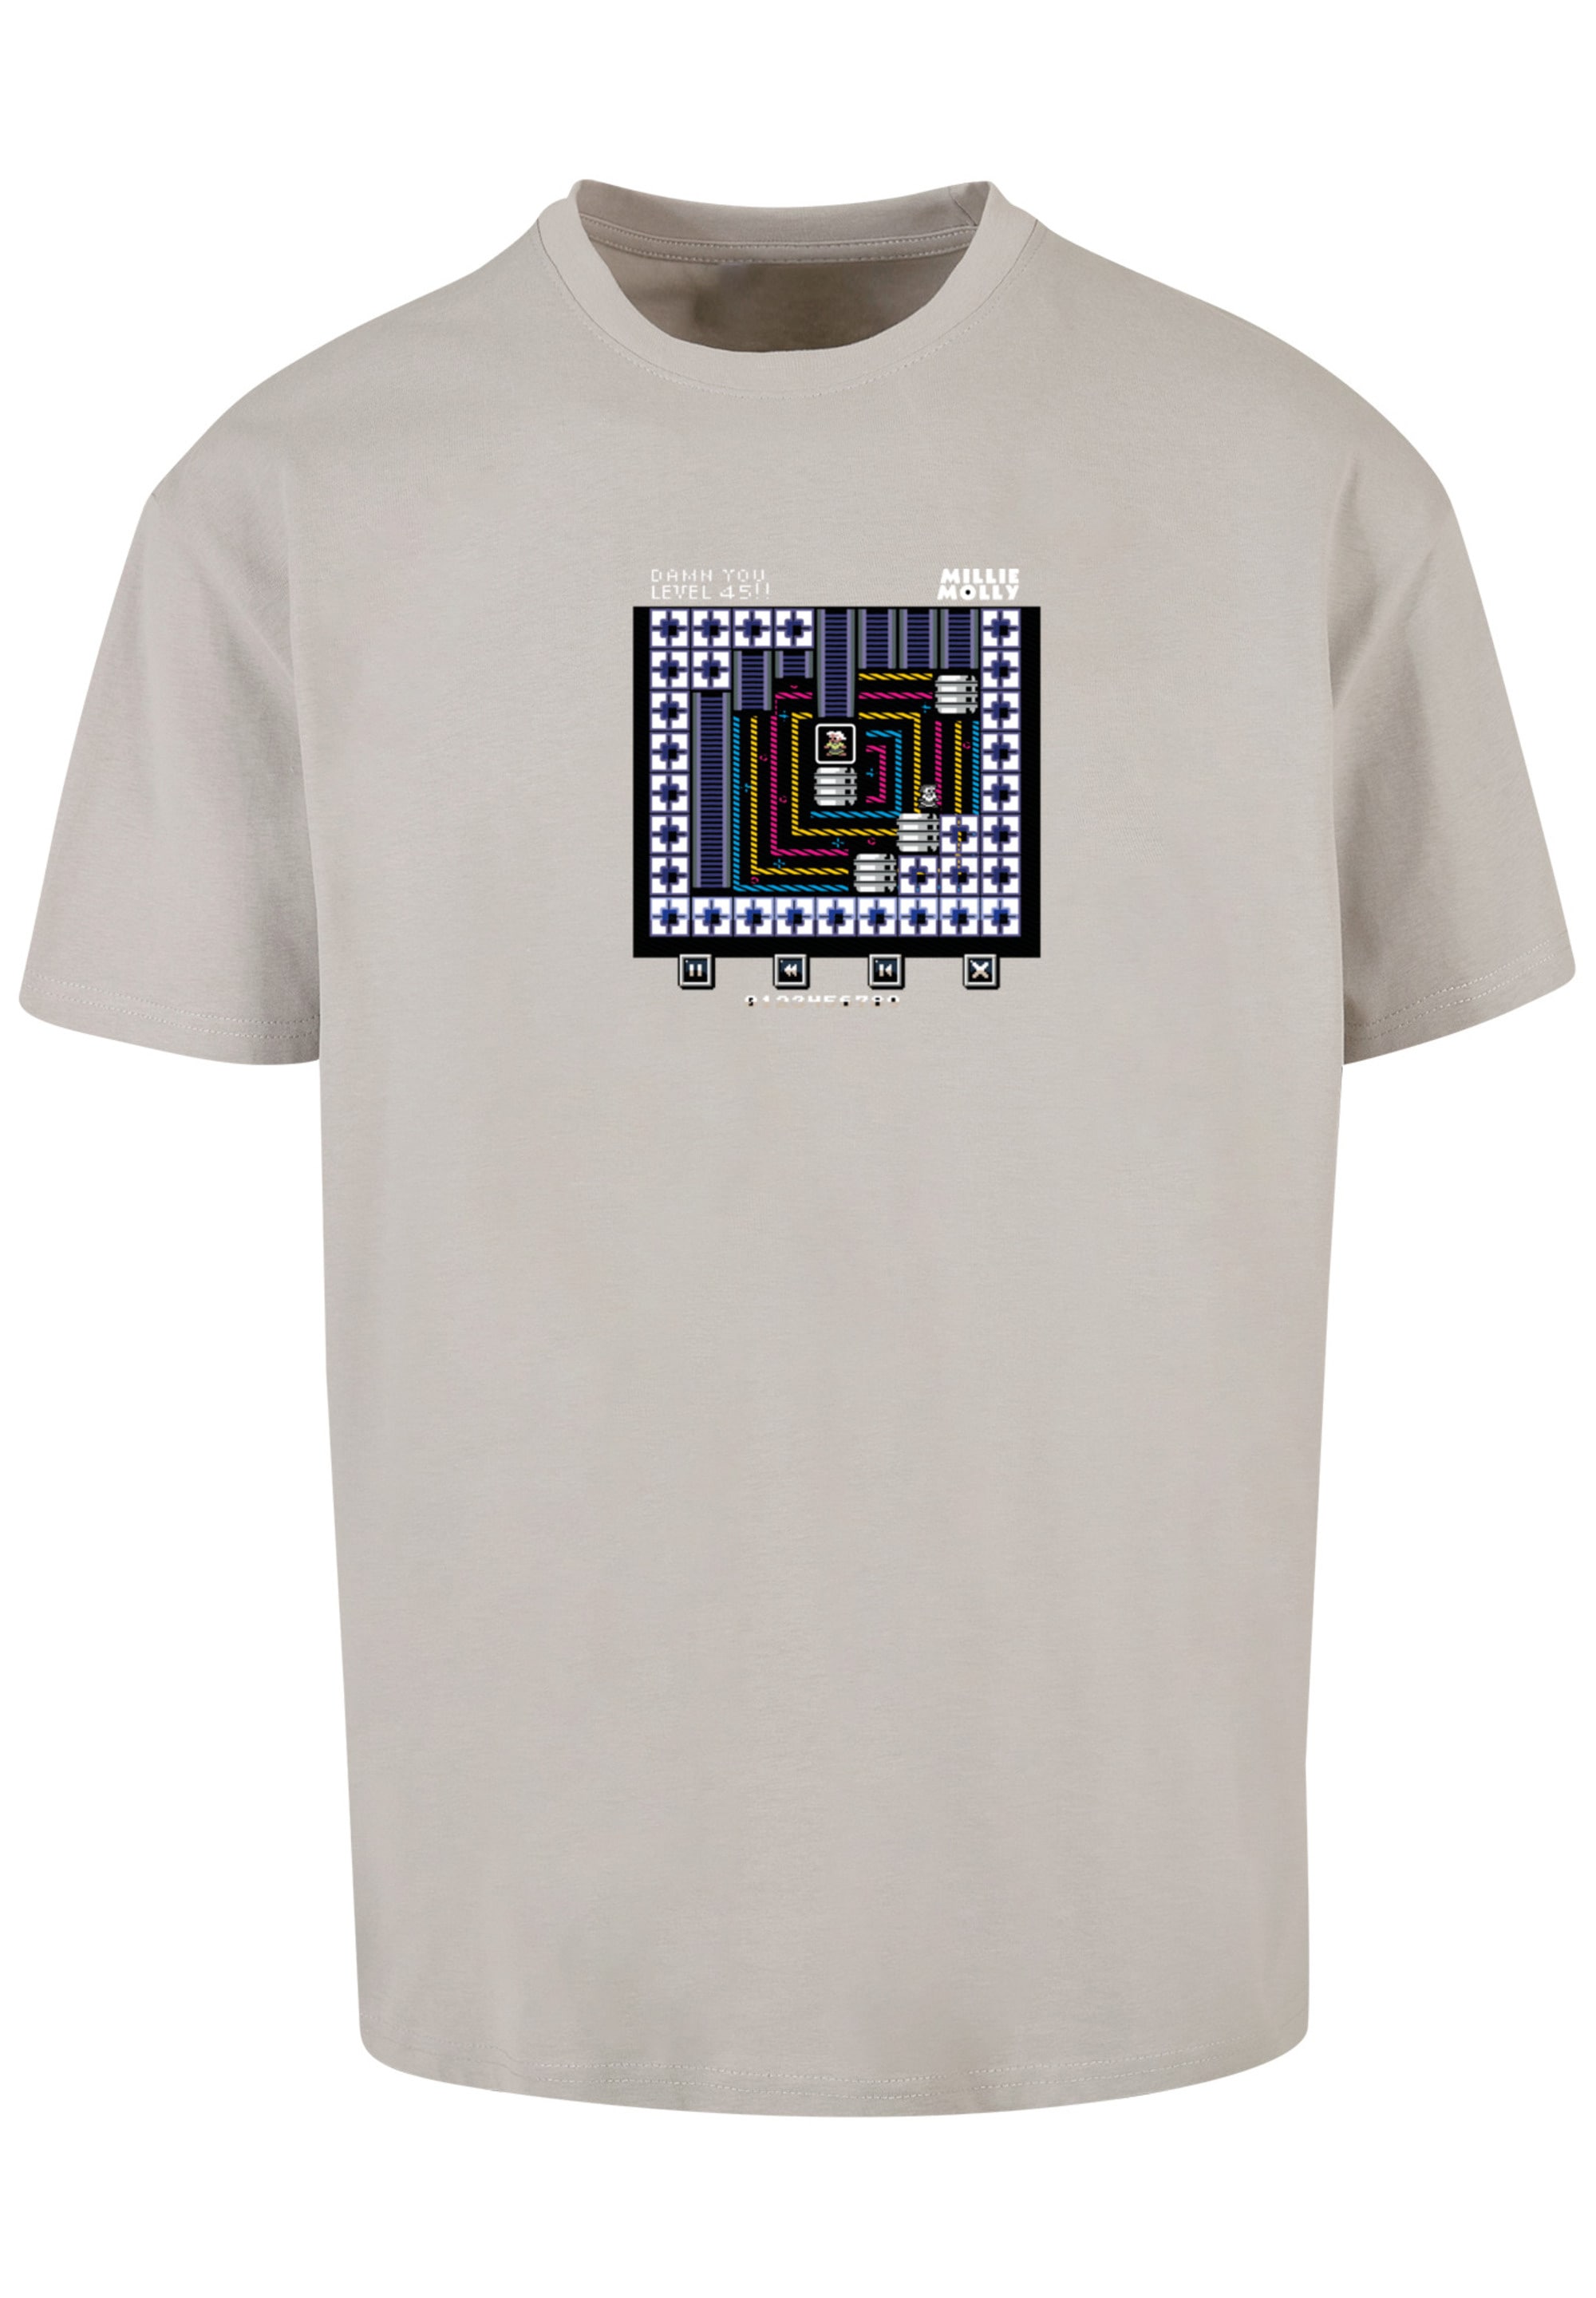 F4NT4STIC T-Shirt »Level 45 Millie Mollie C64 Retro Gaming«, Print